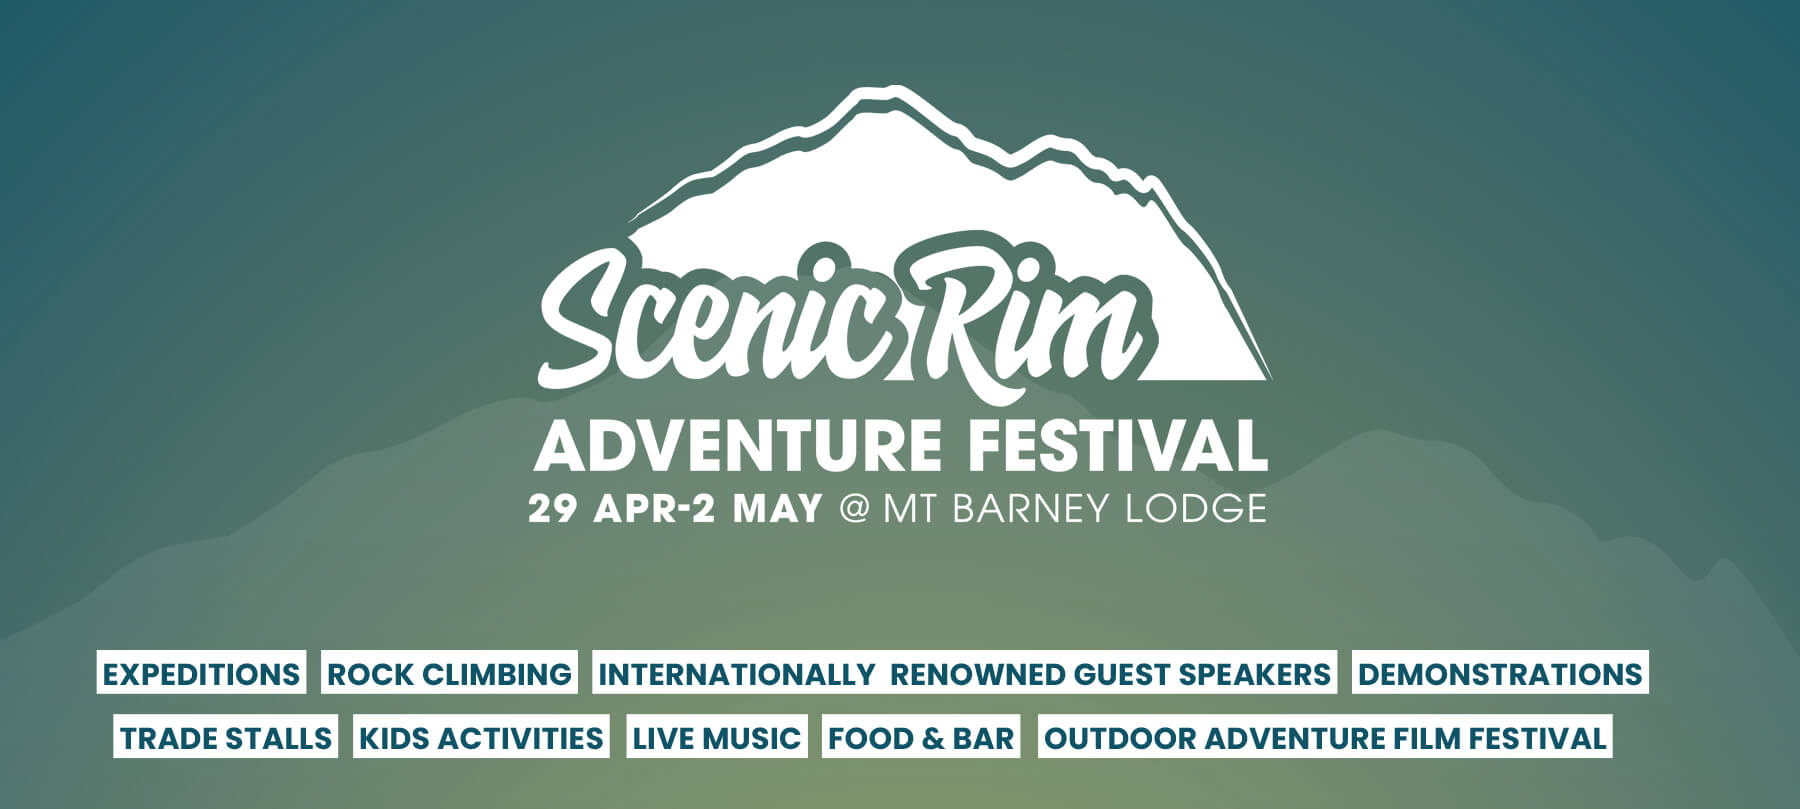 scenic-rim-adventure-festival-trybooking-banner